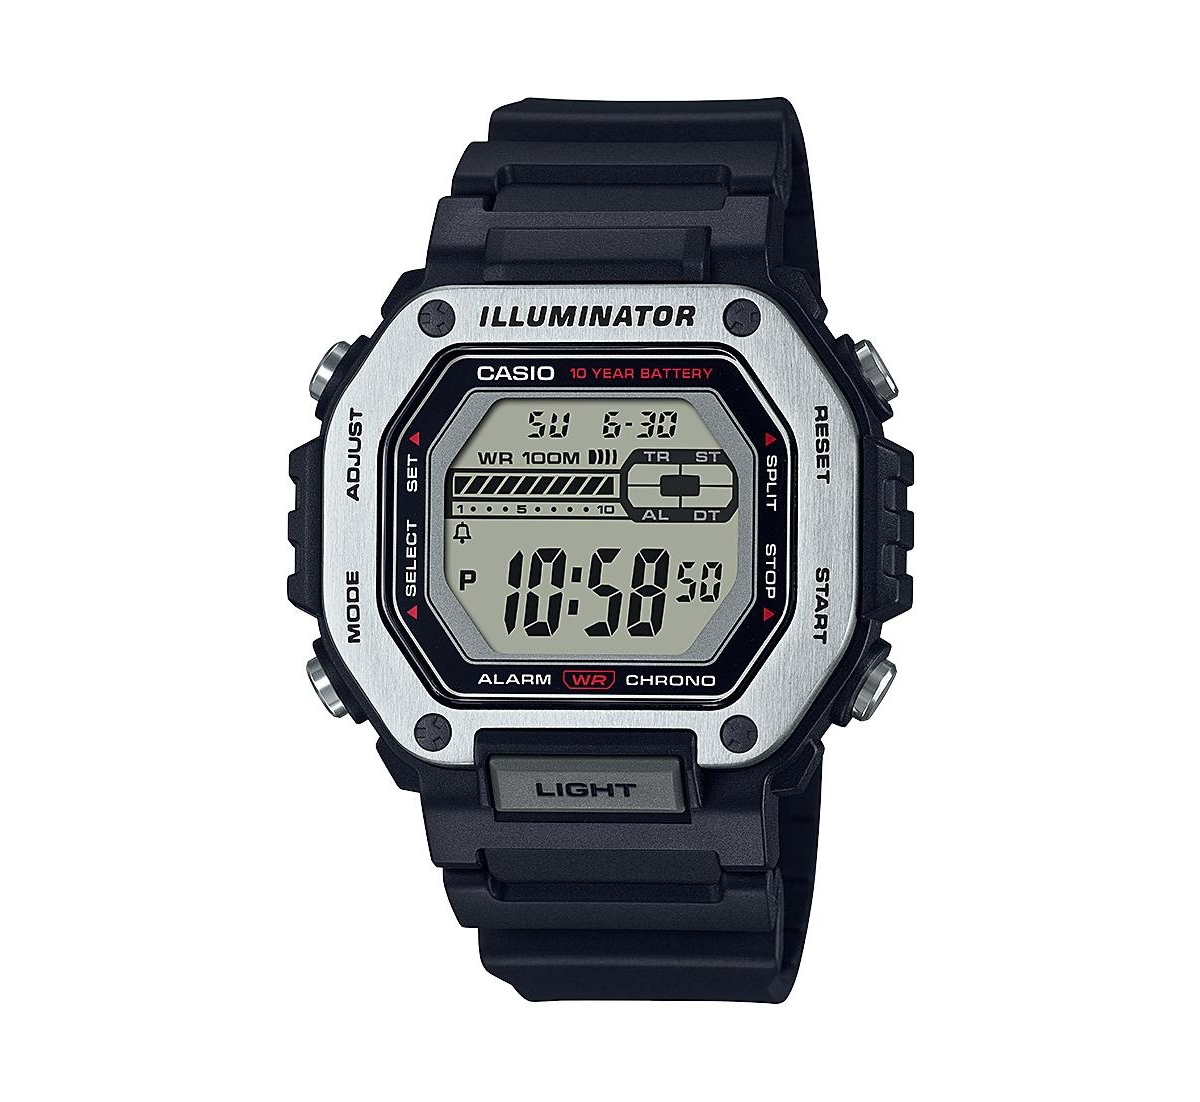 Men's Digital Black Resin Watch 47.2mm, MWD110H-1AV - Black